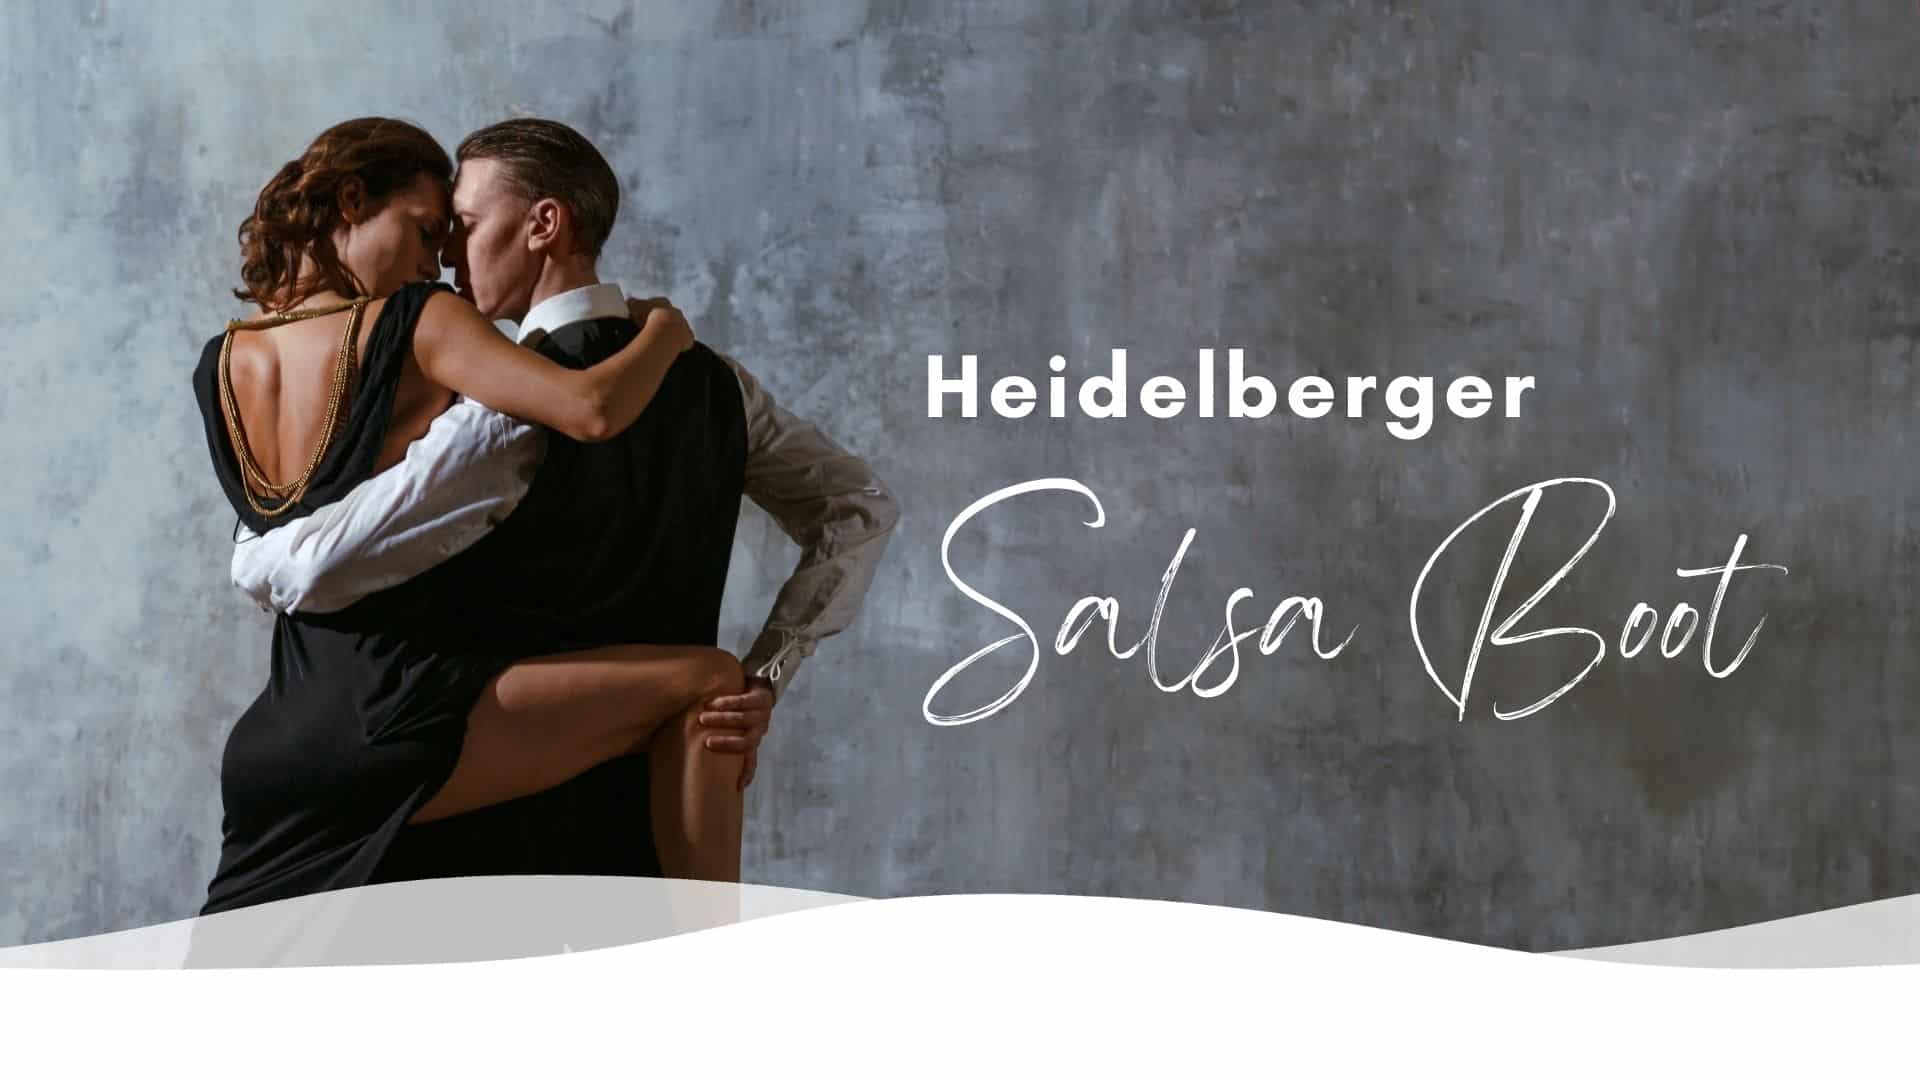 Heidelberger Salsaboot • Weisse Flotte Heidelberg